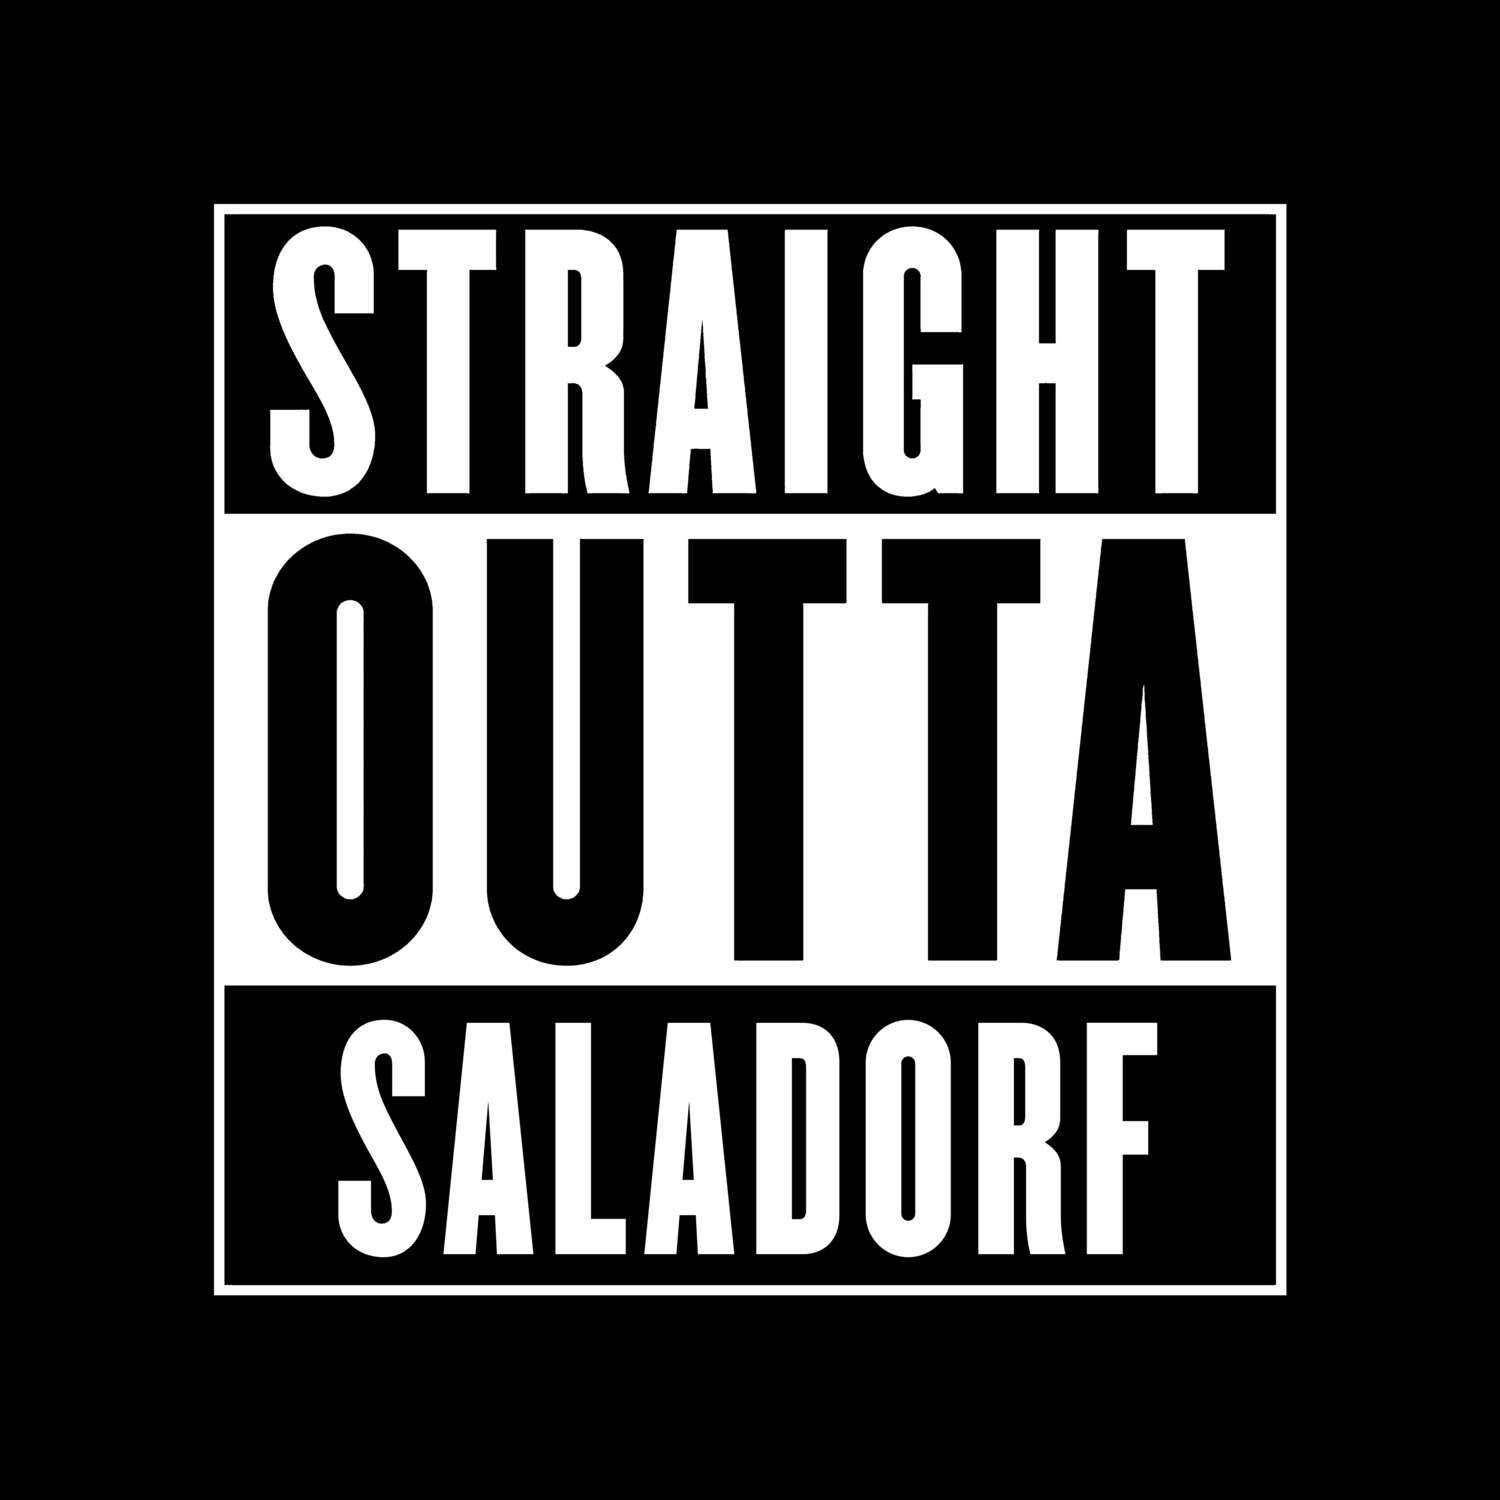 Saladorf T-Shirt »Straight Outta«